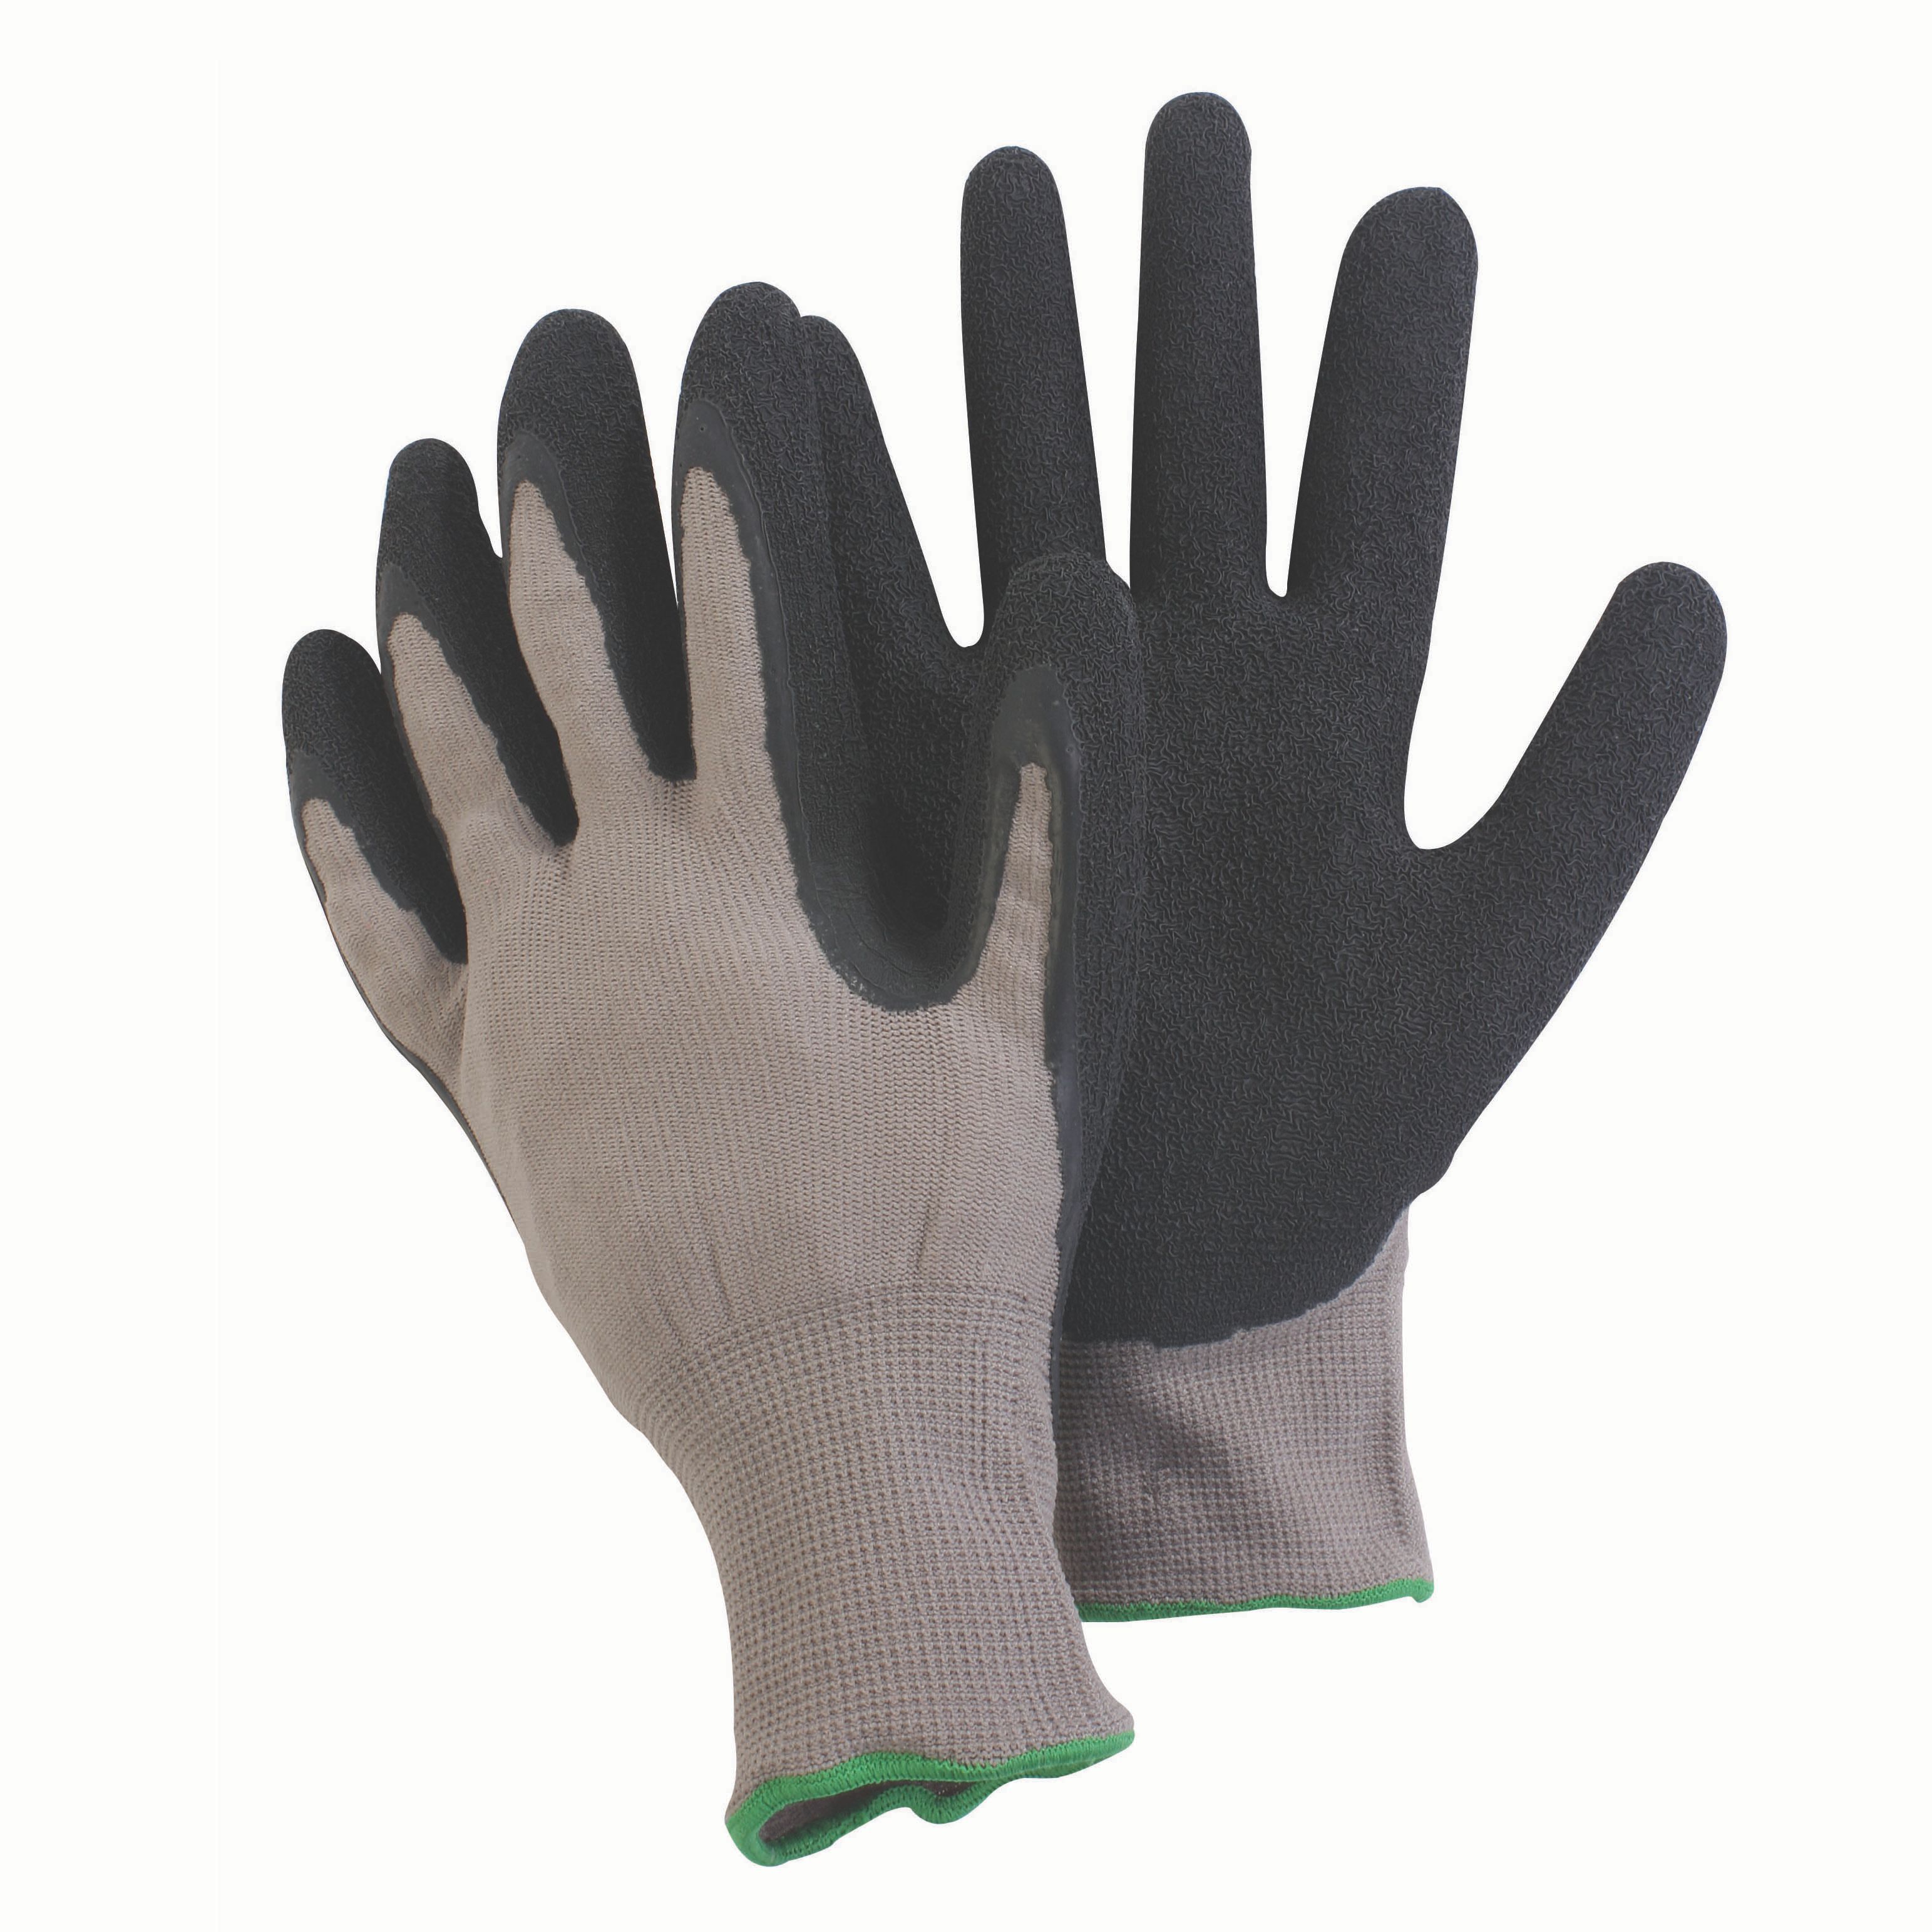 Briers General worker gloves, Medium, Pack of 2 | Departments | DIY at B&Q